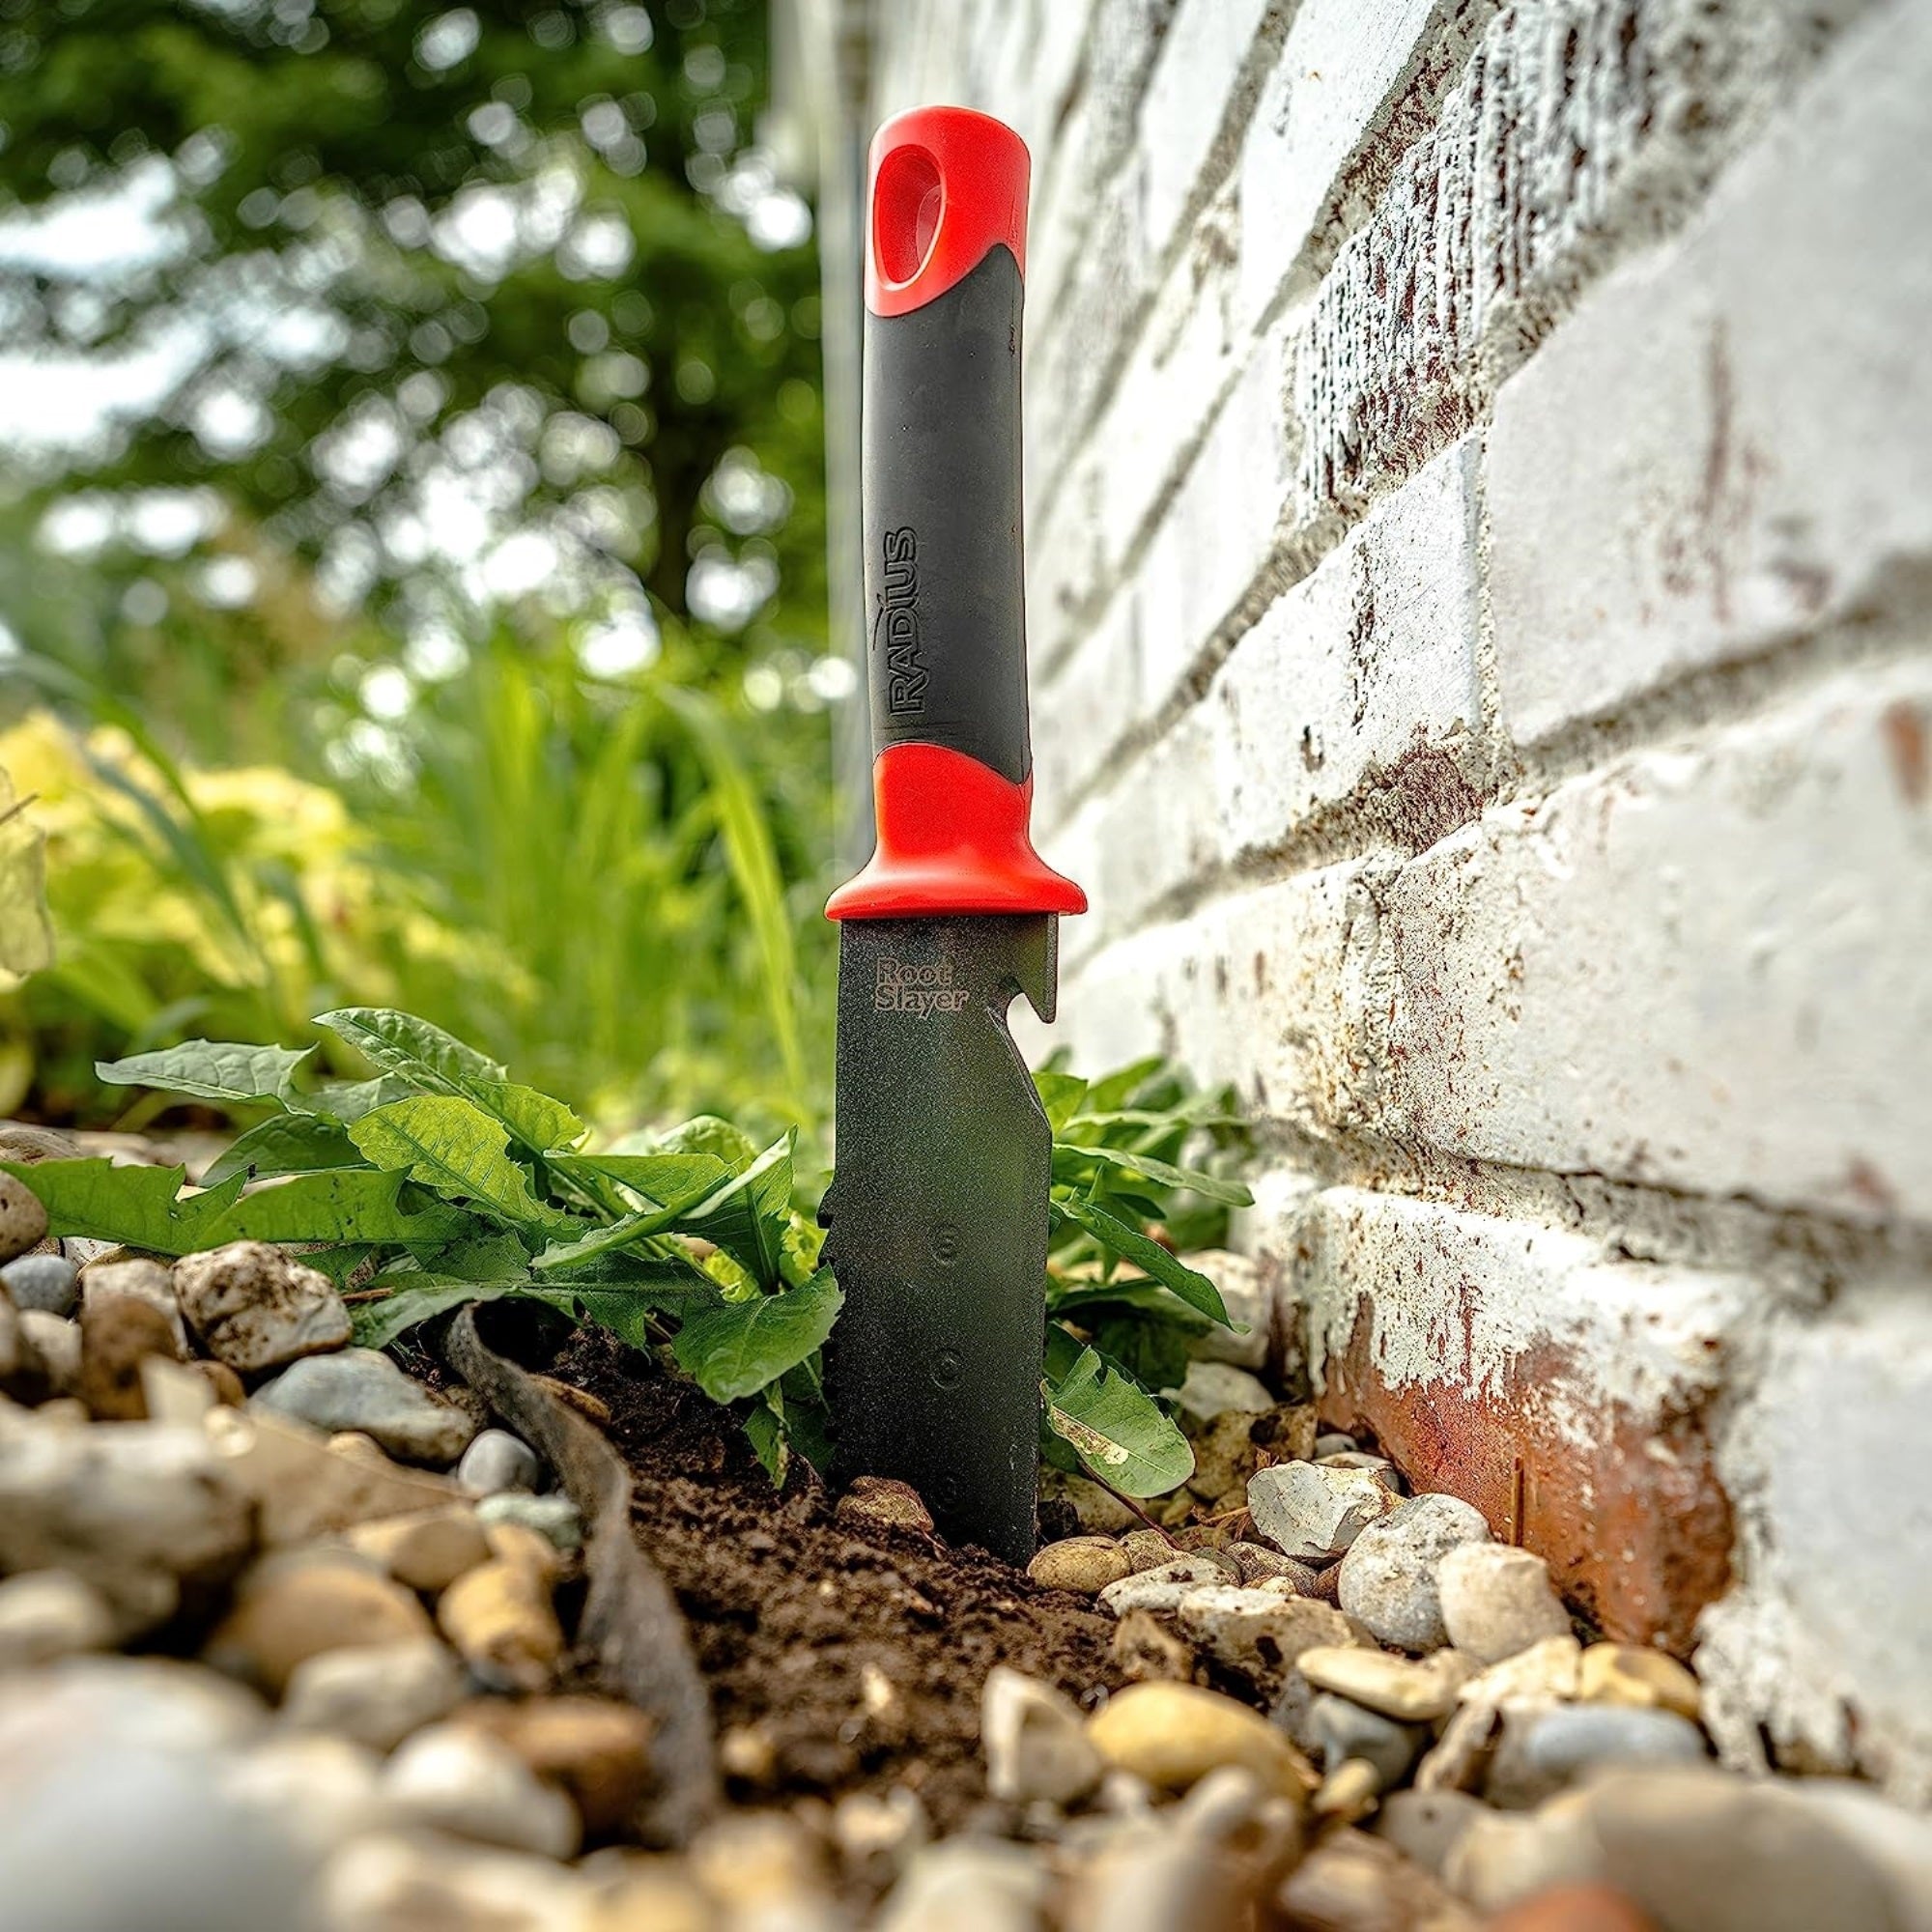 Radius Garden Root Slayer Soil Knife, Carbon Steel Blade, Ergonomic Handle, 7.5" Blade